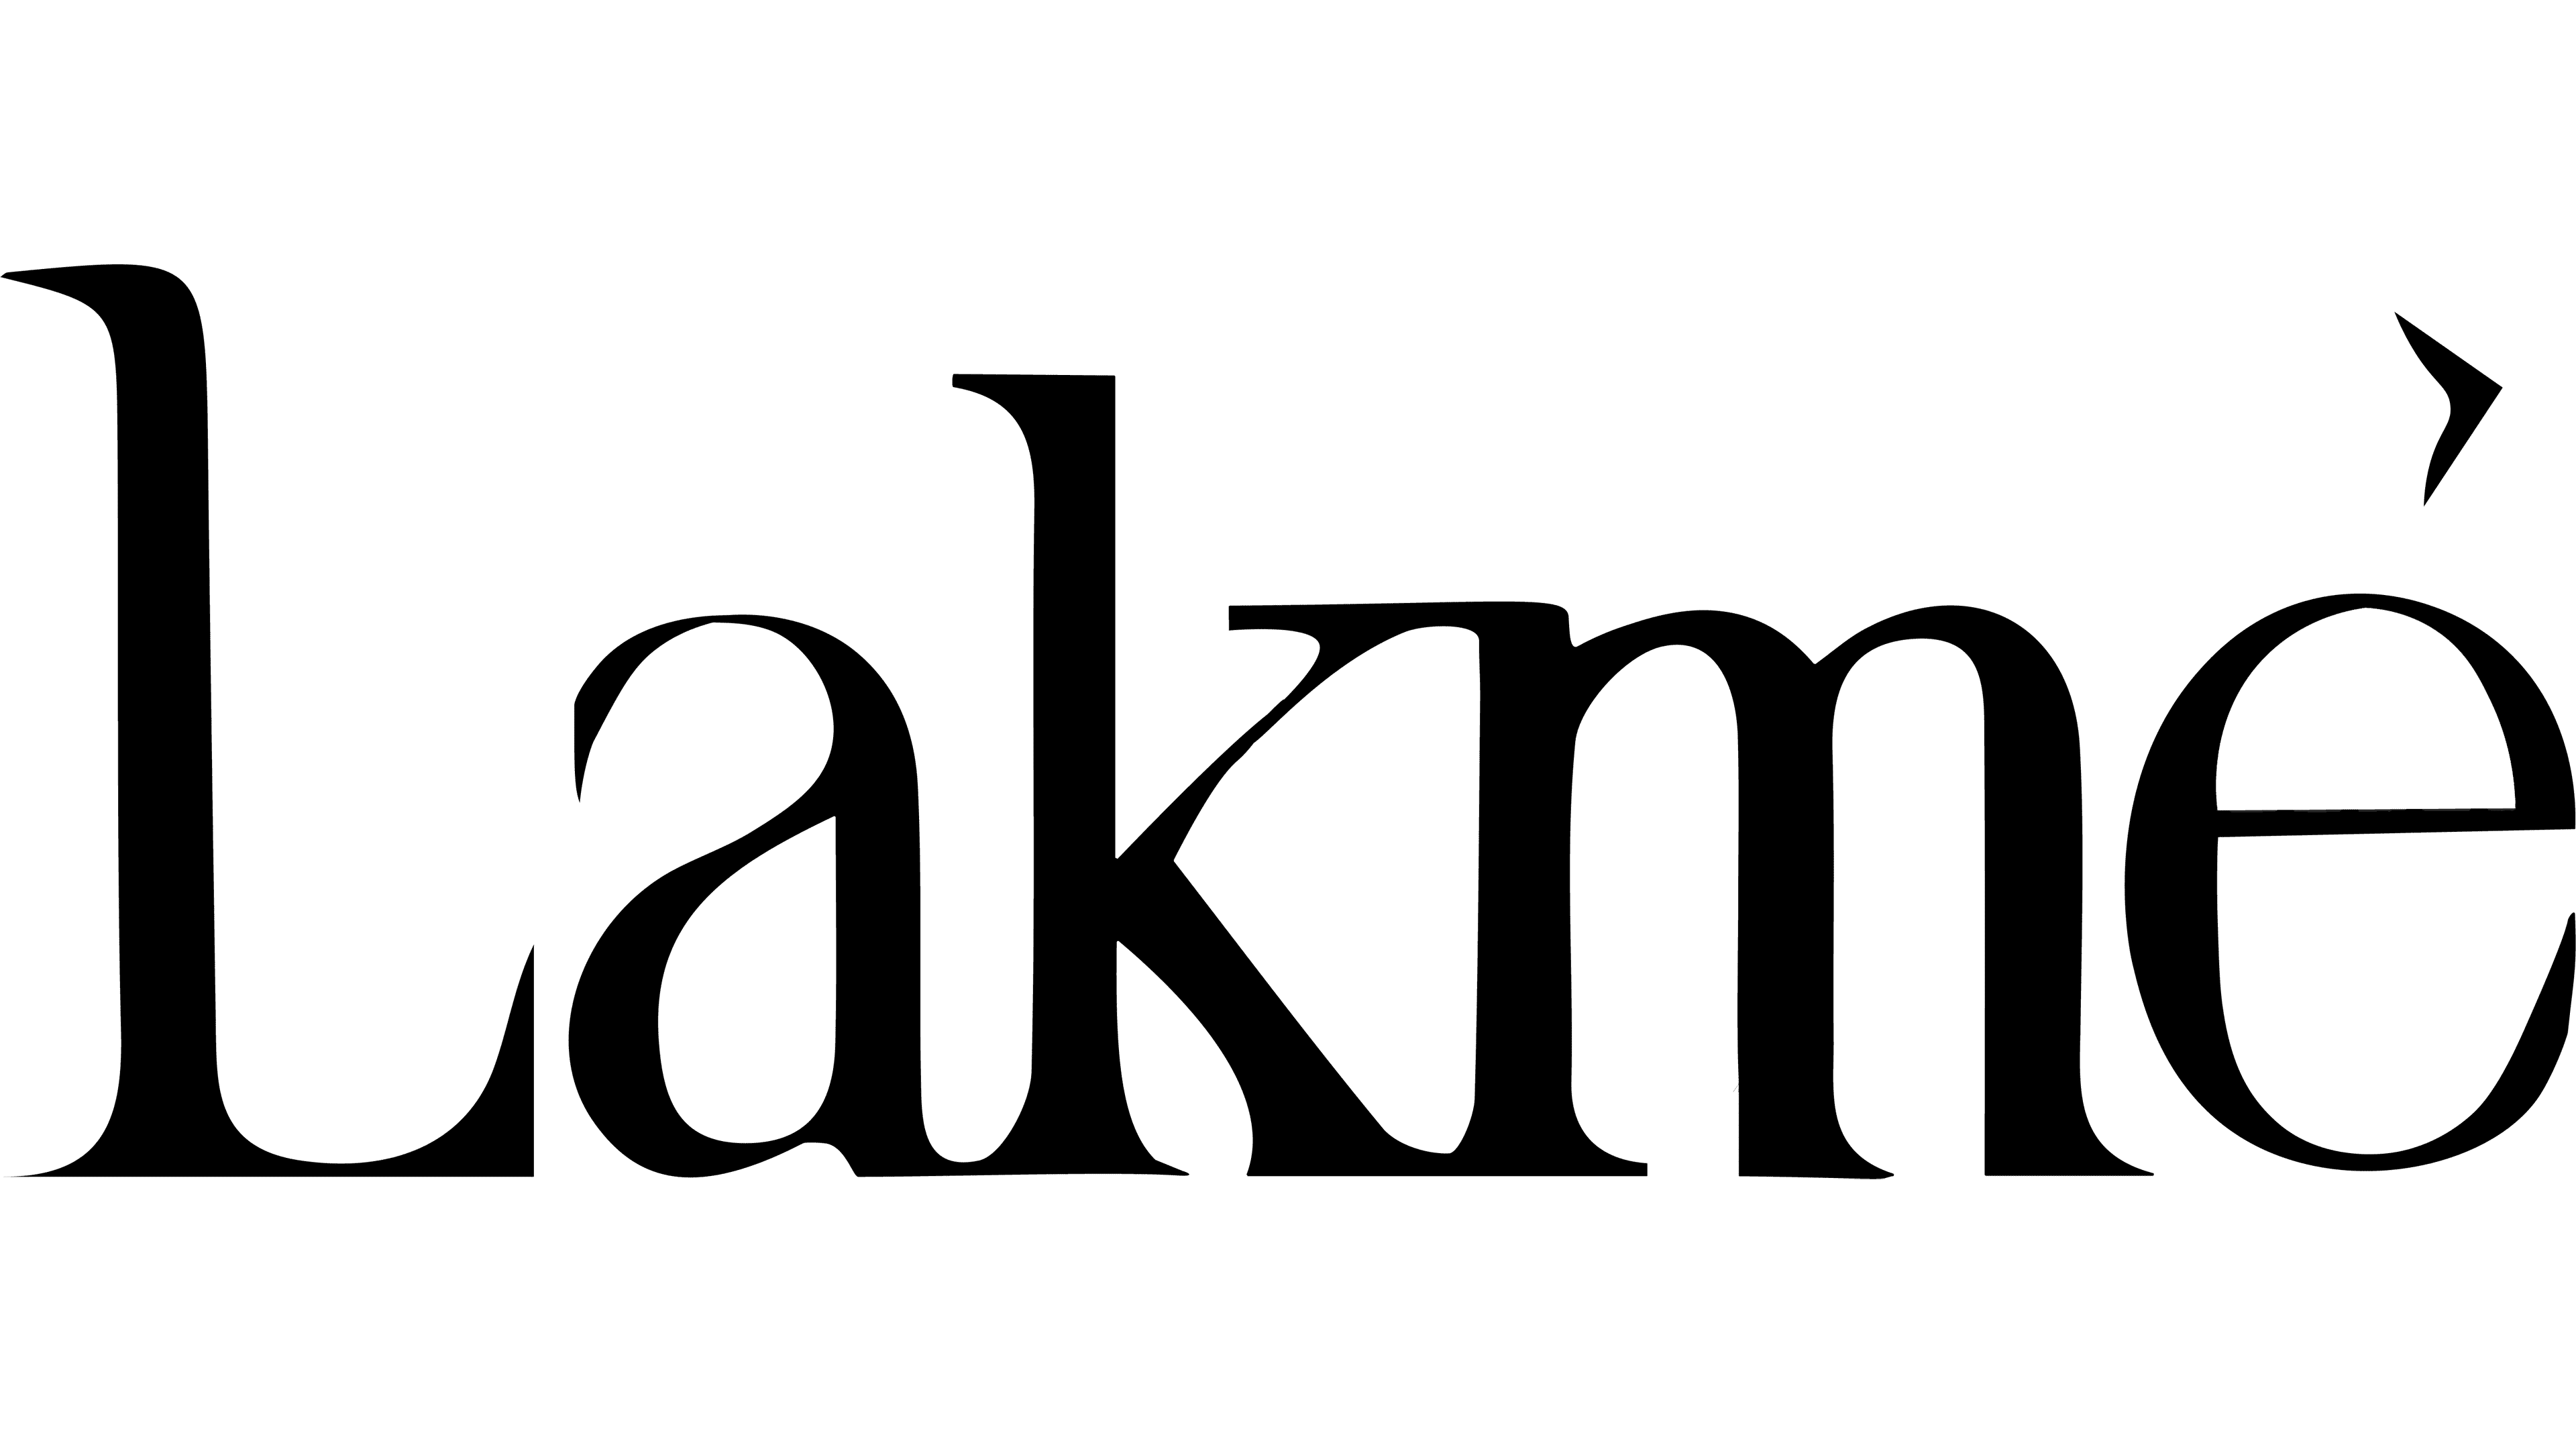 LAMIK Beauty - Crunchbase Company Profile & Funding